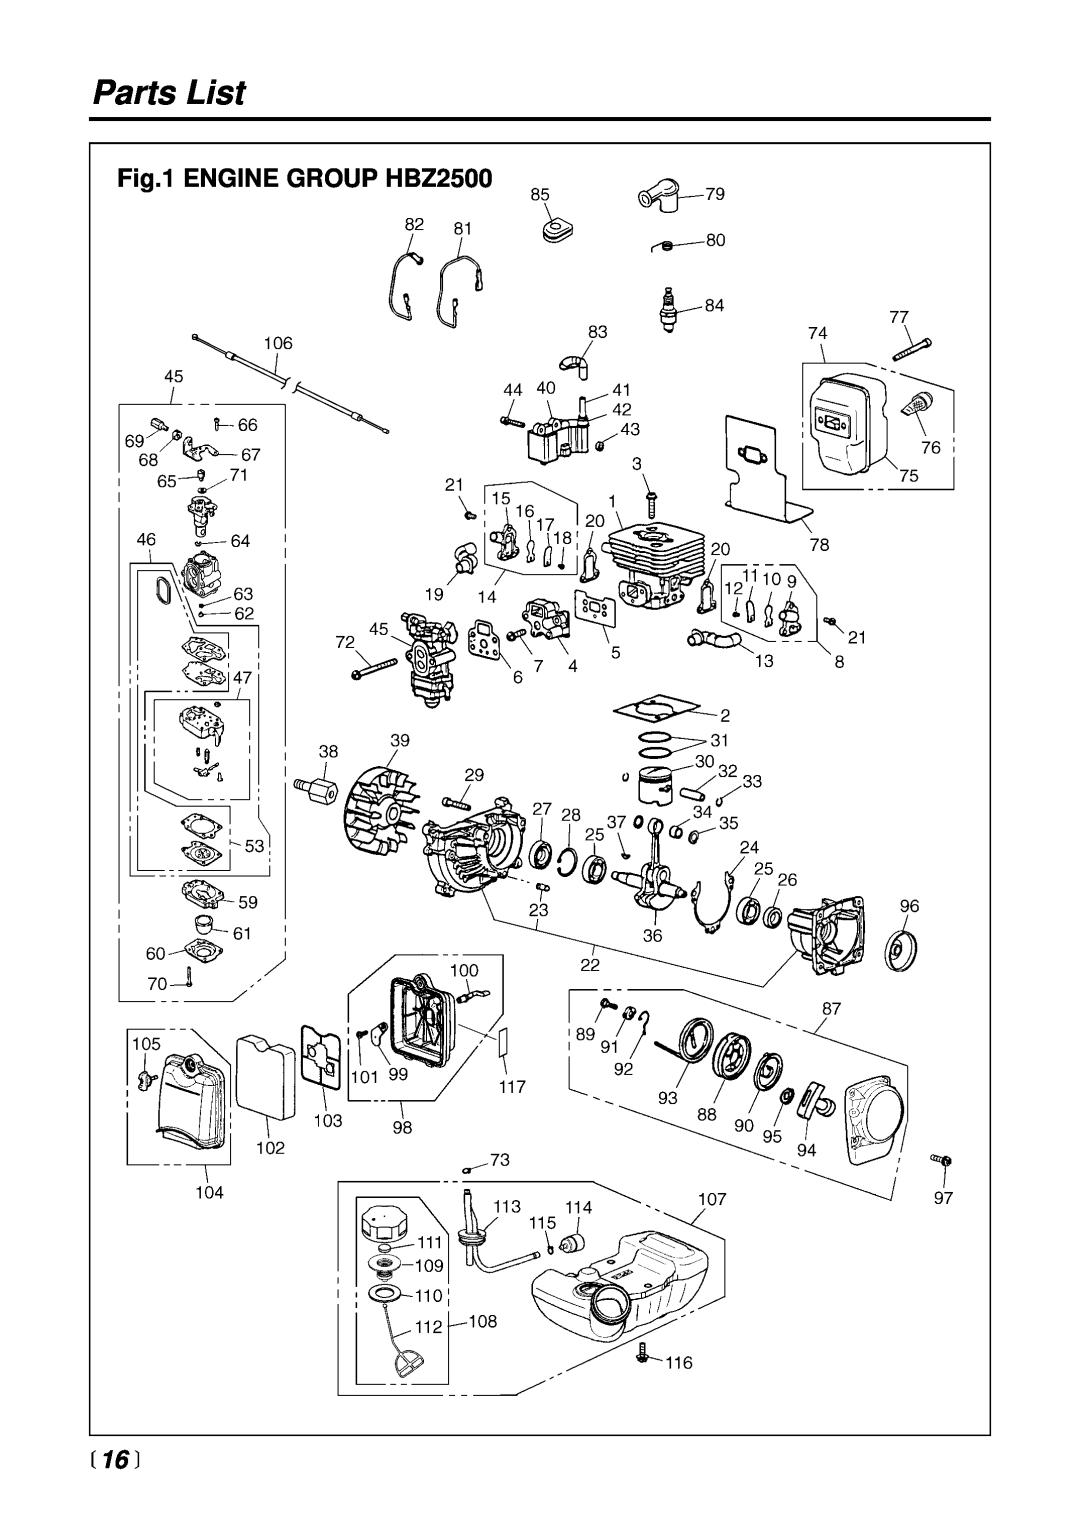 RedMax manual  16 , Parts List, ENGINE GROUP HBZ2500 